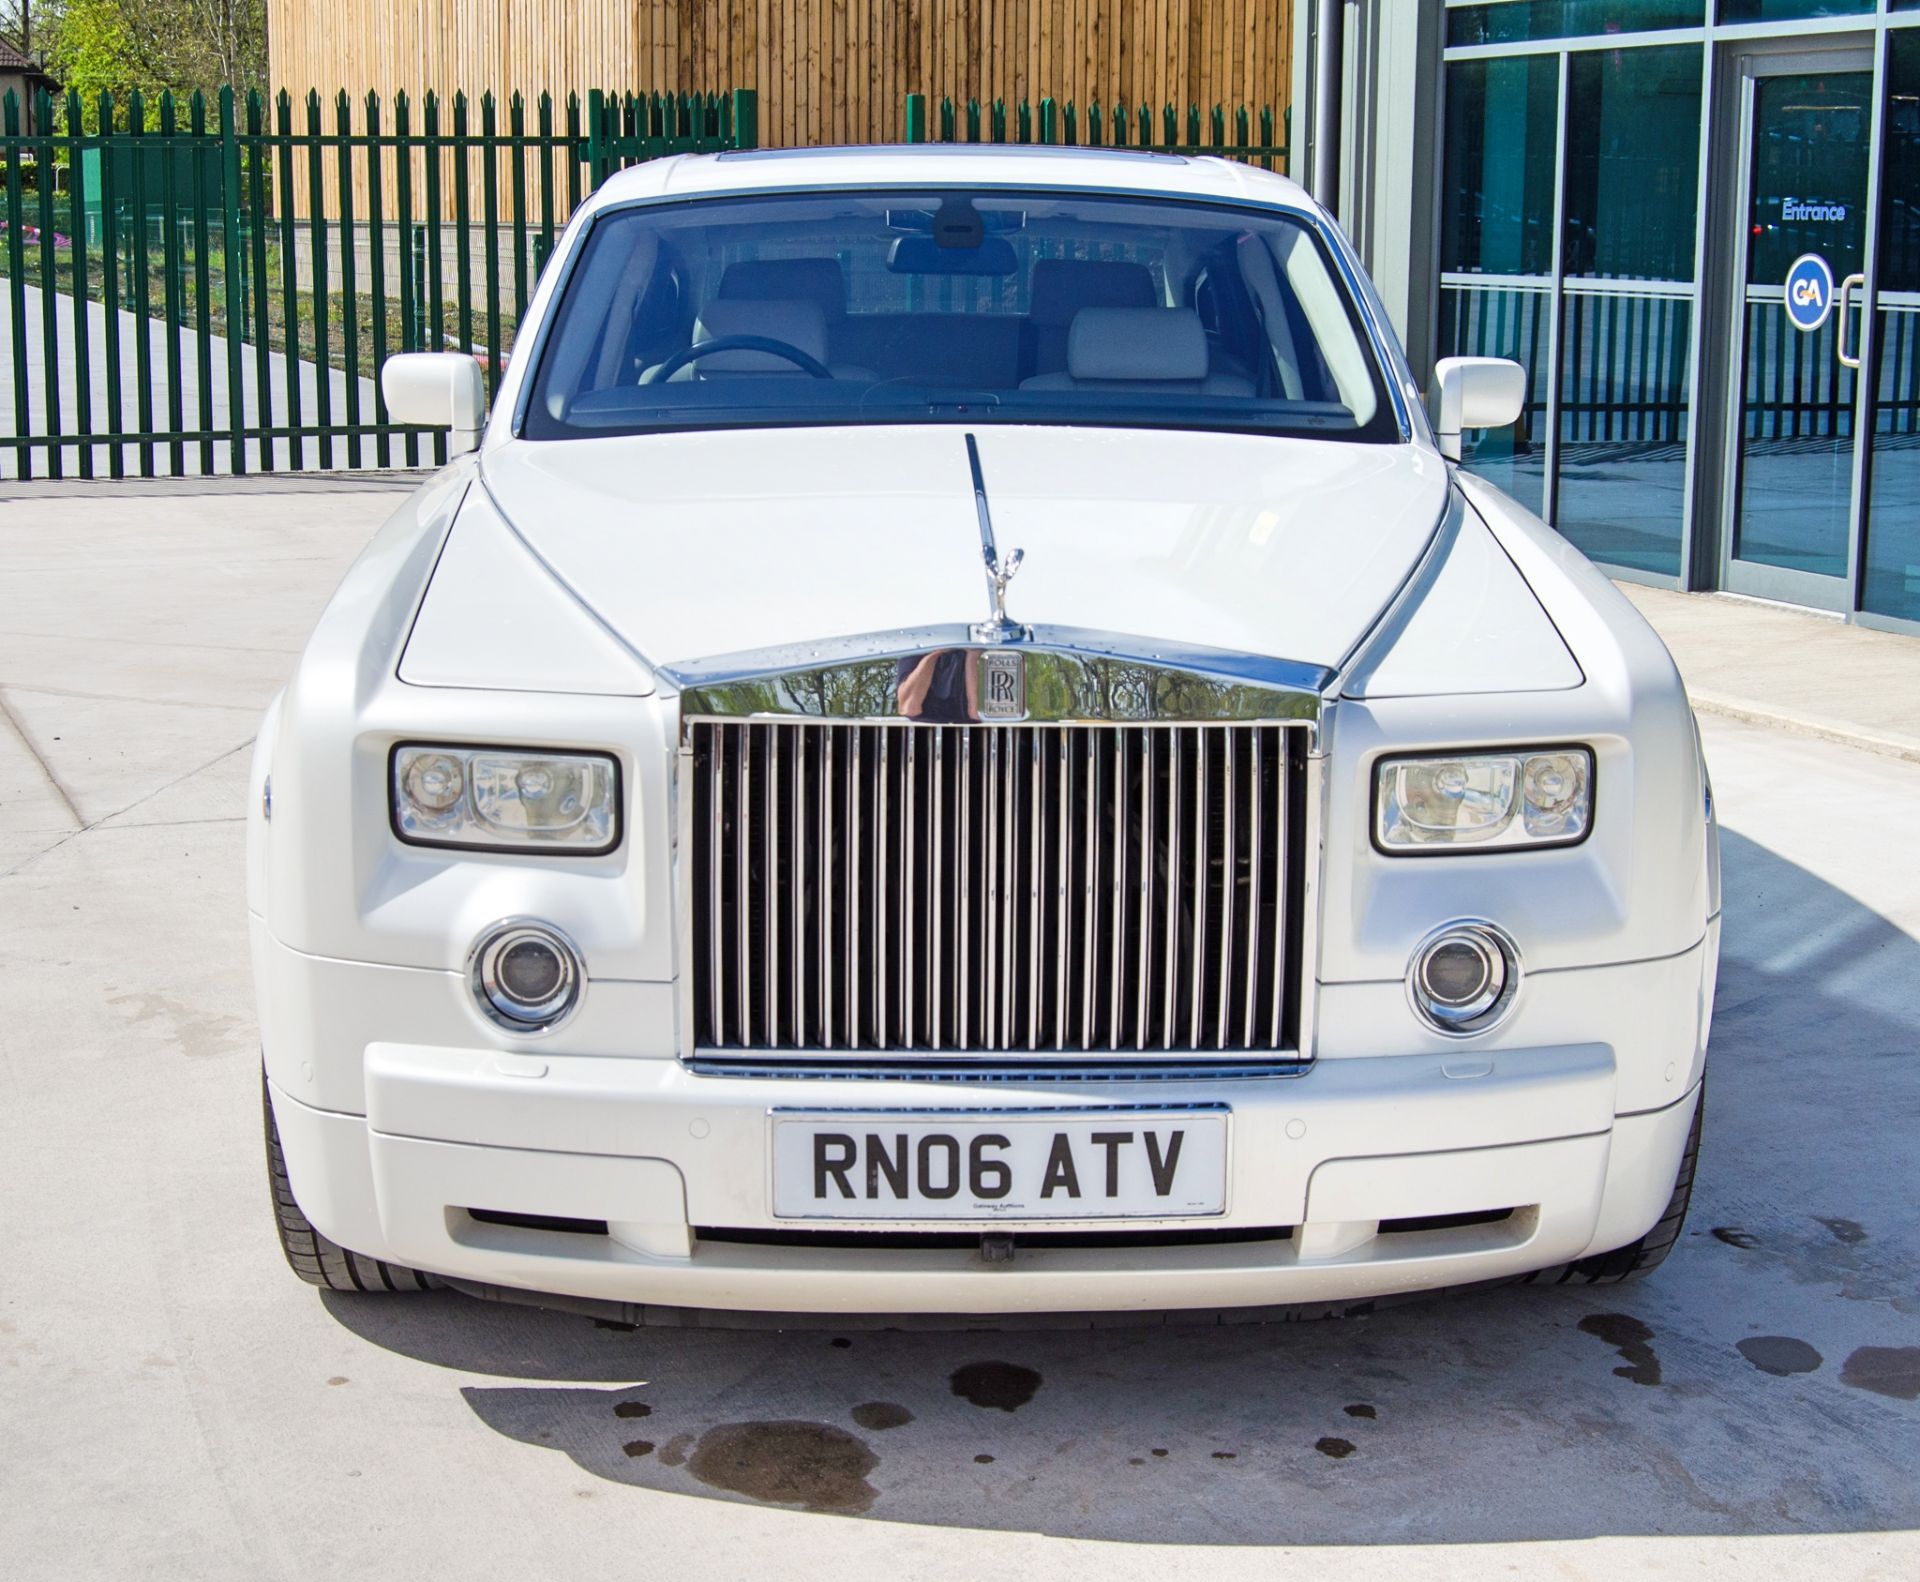 2006 Rolls Royce Phantom 6749cc V12 Auto 4 door saloon car PLUS VAT - Image 10 of 52